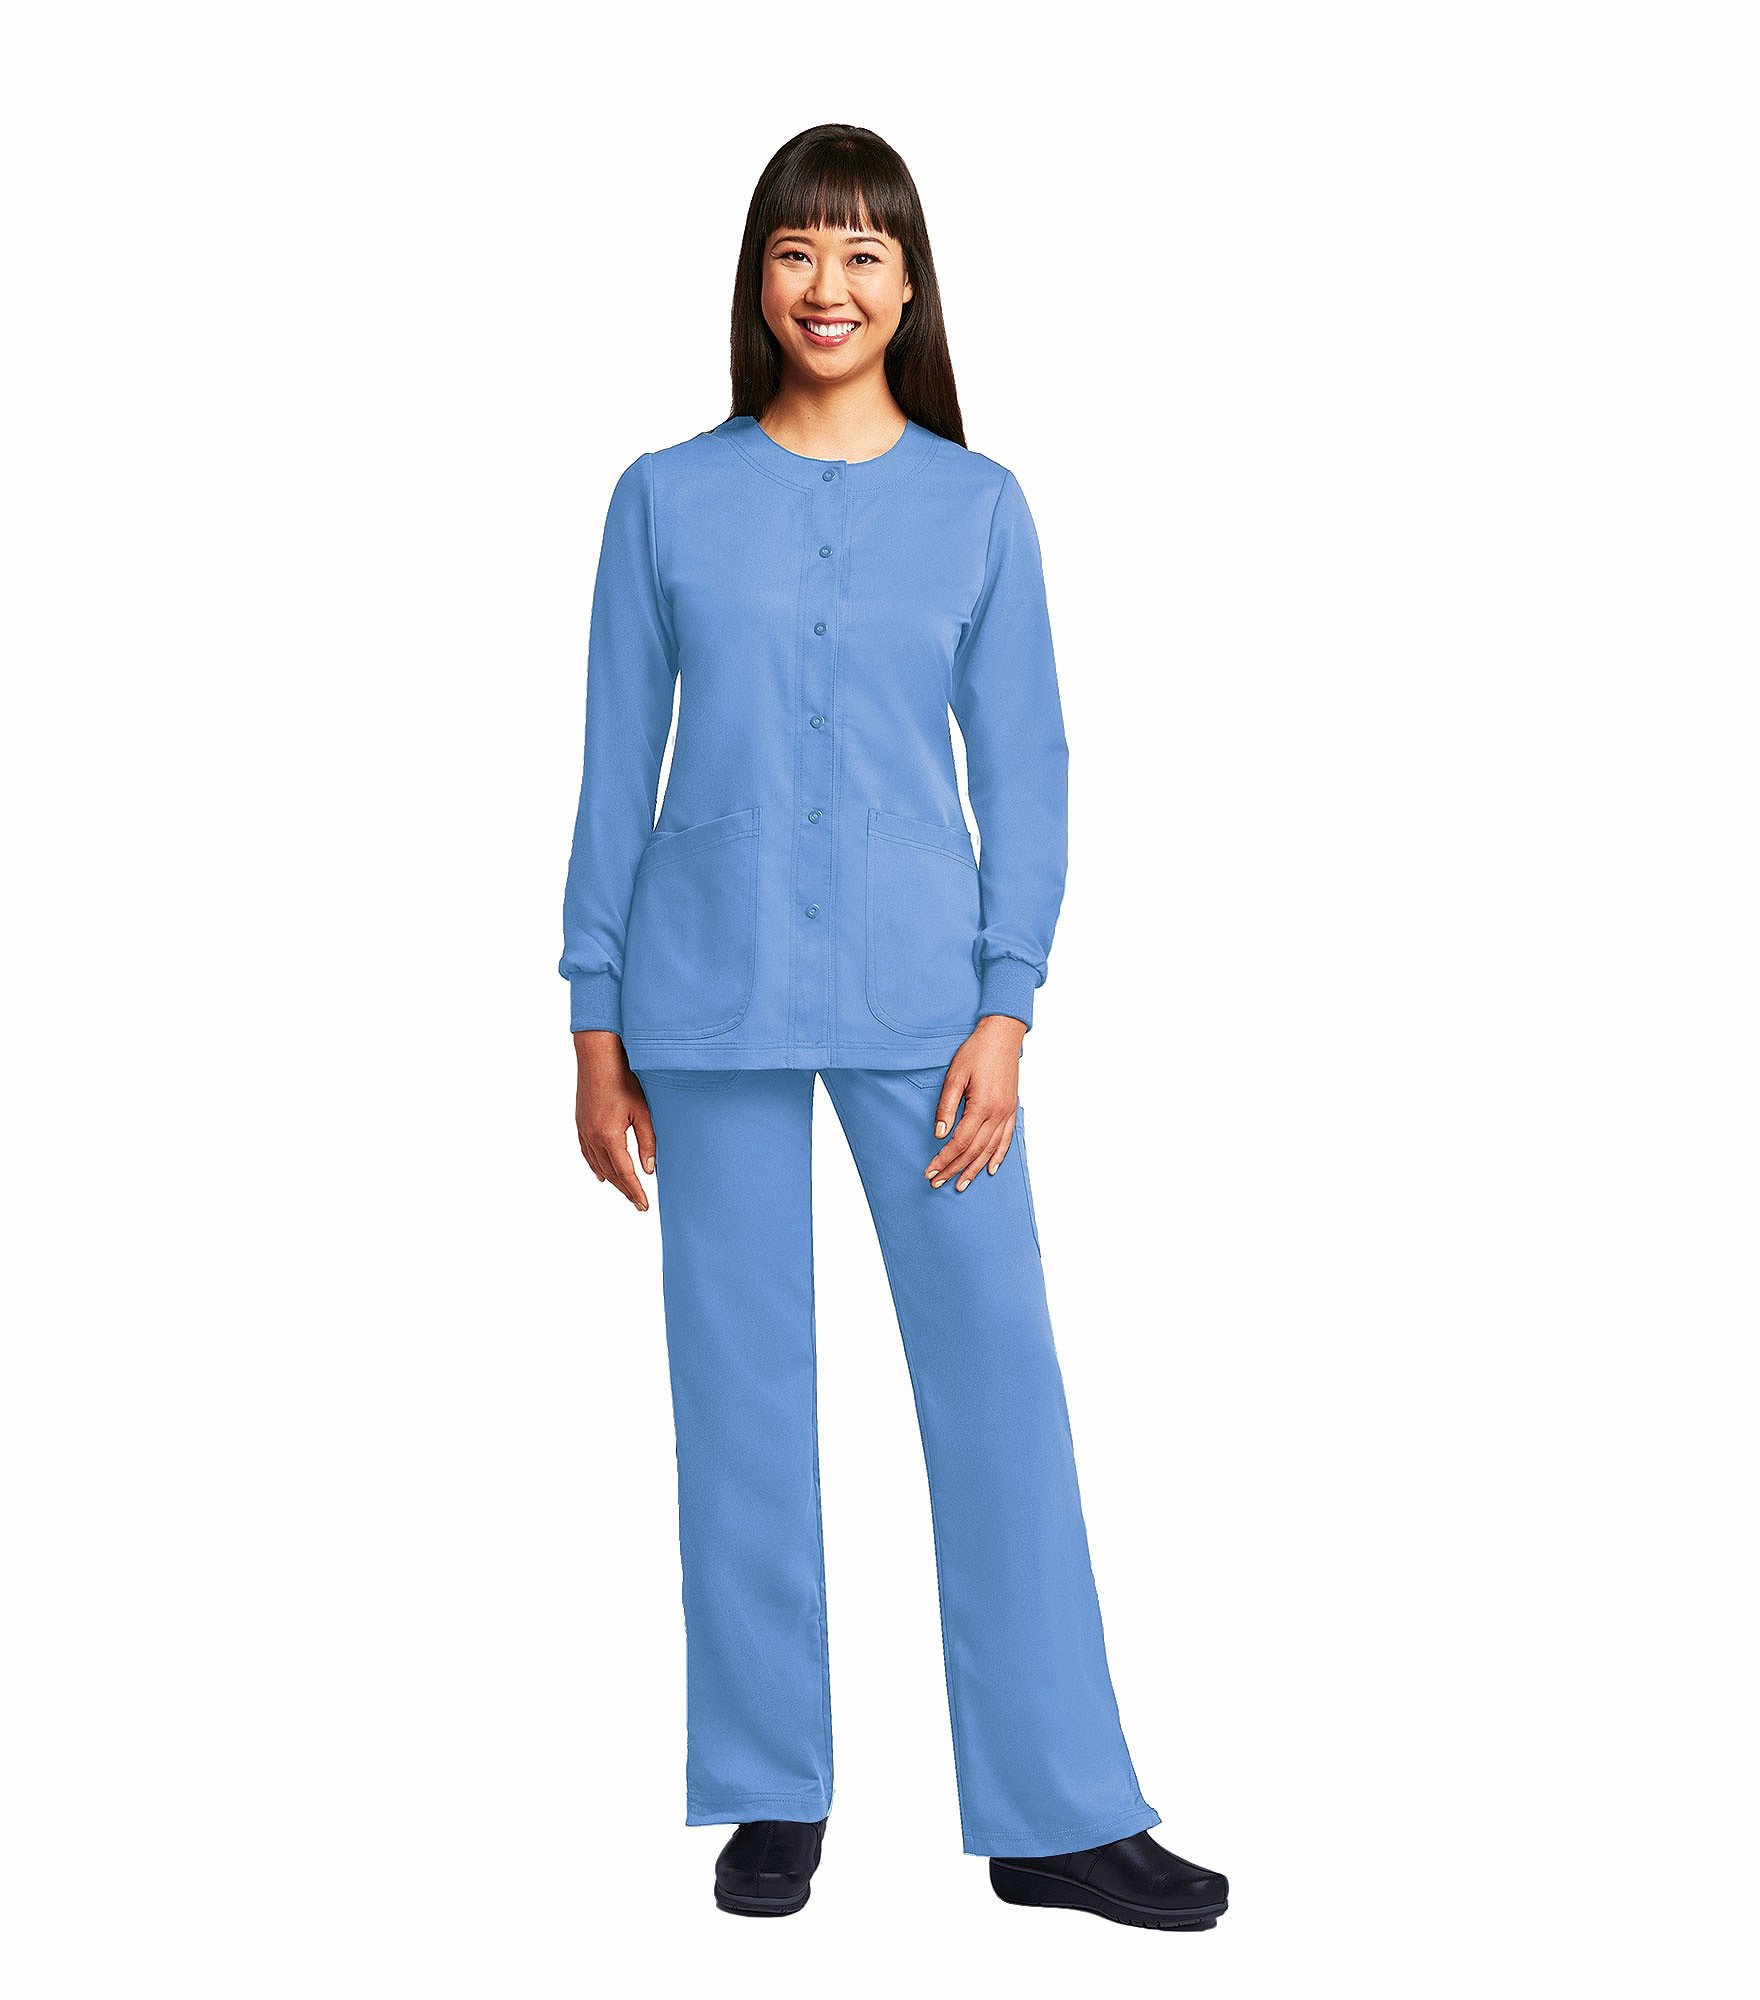 Barco Grey's Anatomy Women's Snap Front Warm-Up Scrub Jacket-4450